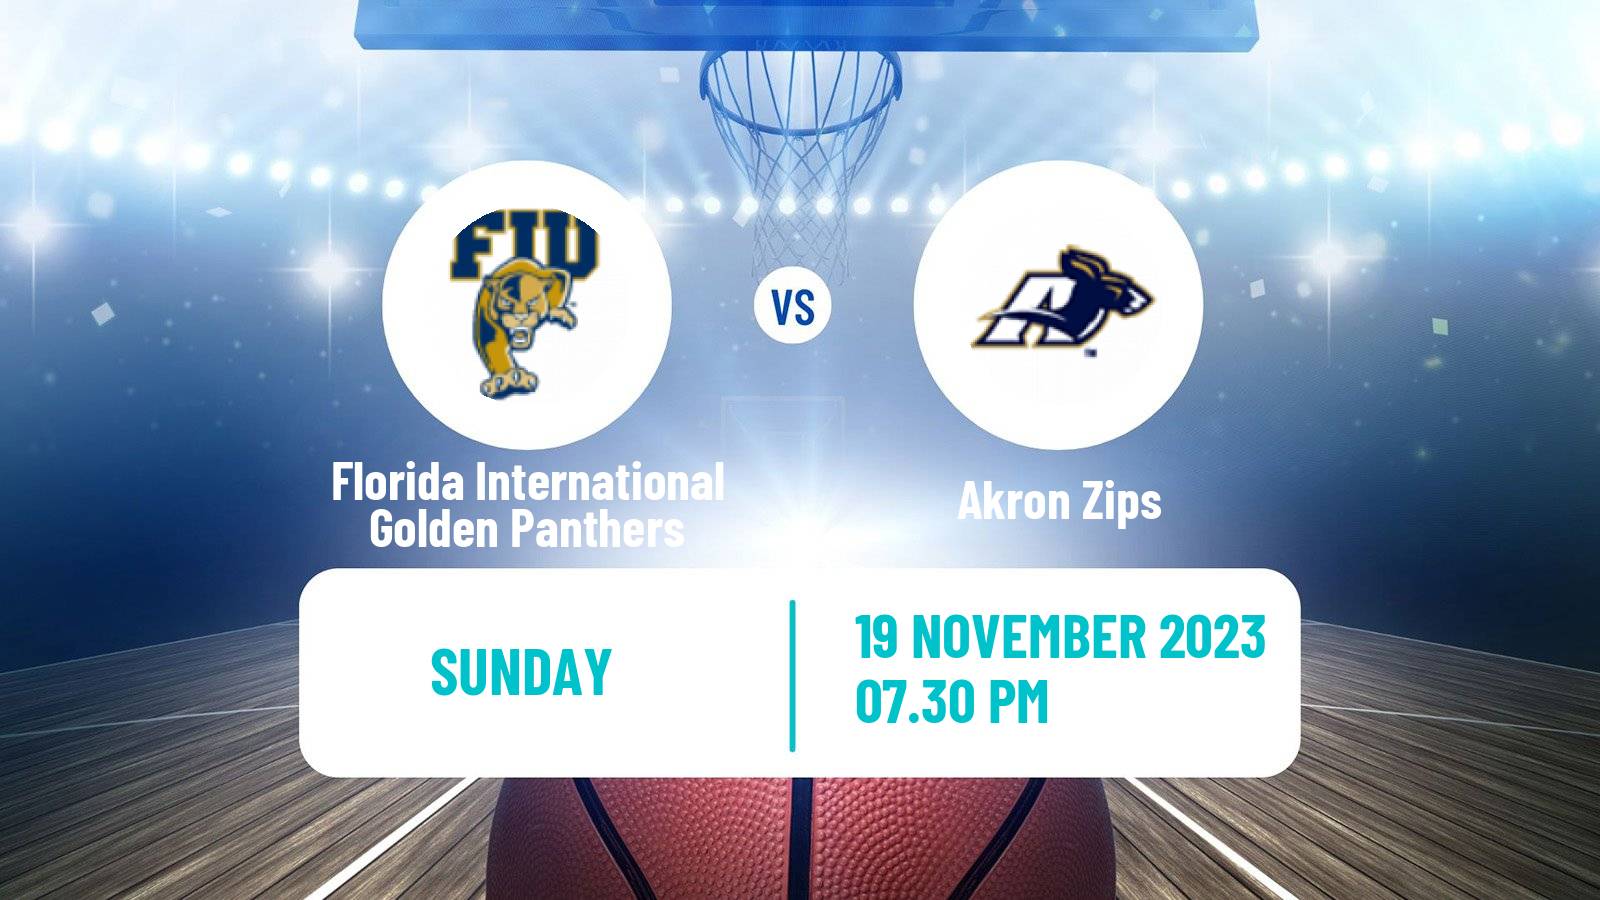 Basketball NCAA College Basketball Florida International Golden Panthers - Akron Zips